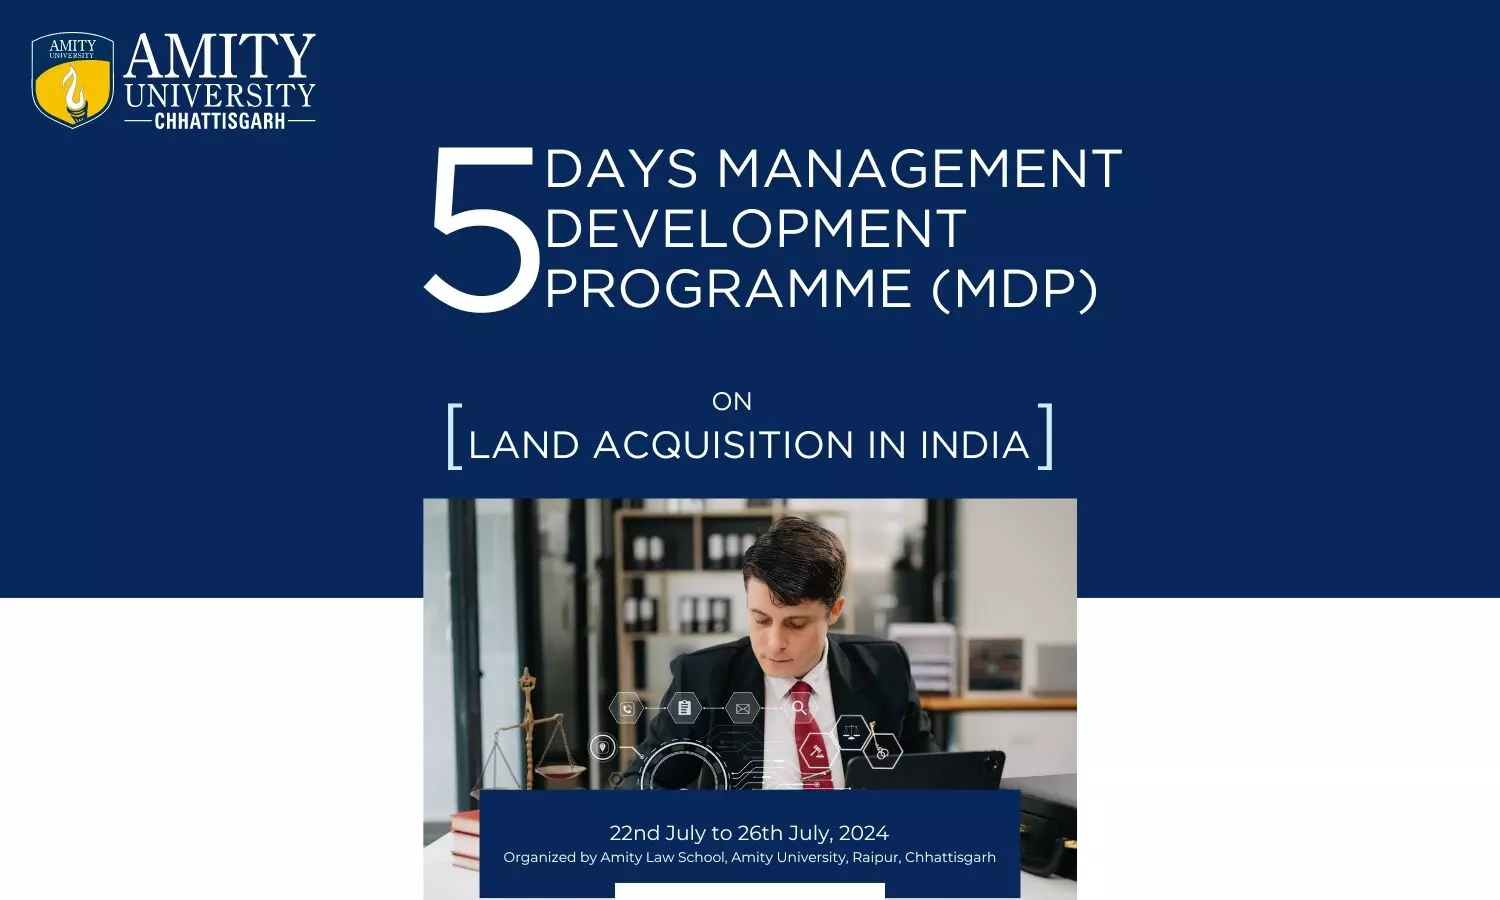 5 Days Management Development Programme on Land Acquisition in India | Amity Chhattisgarh